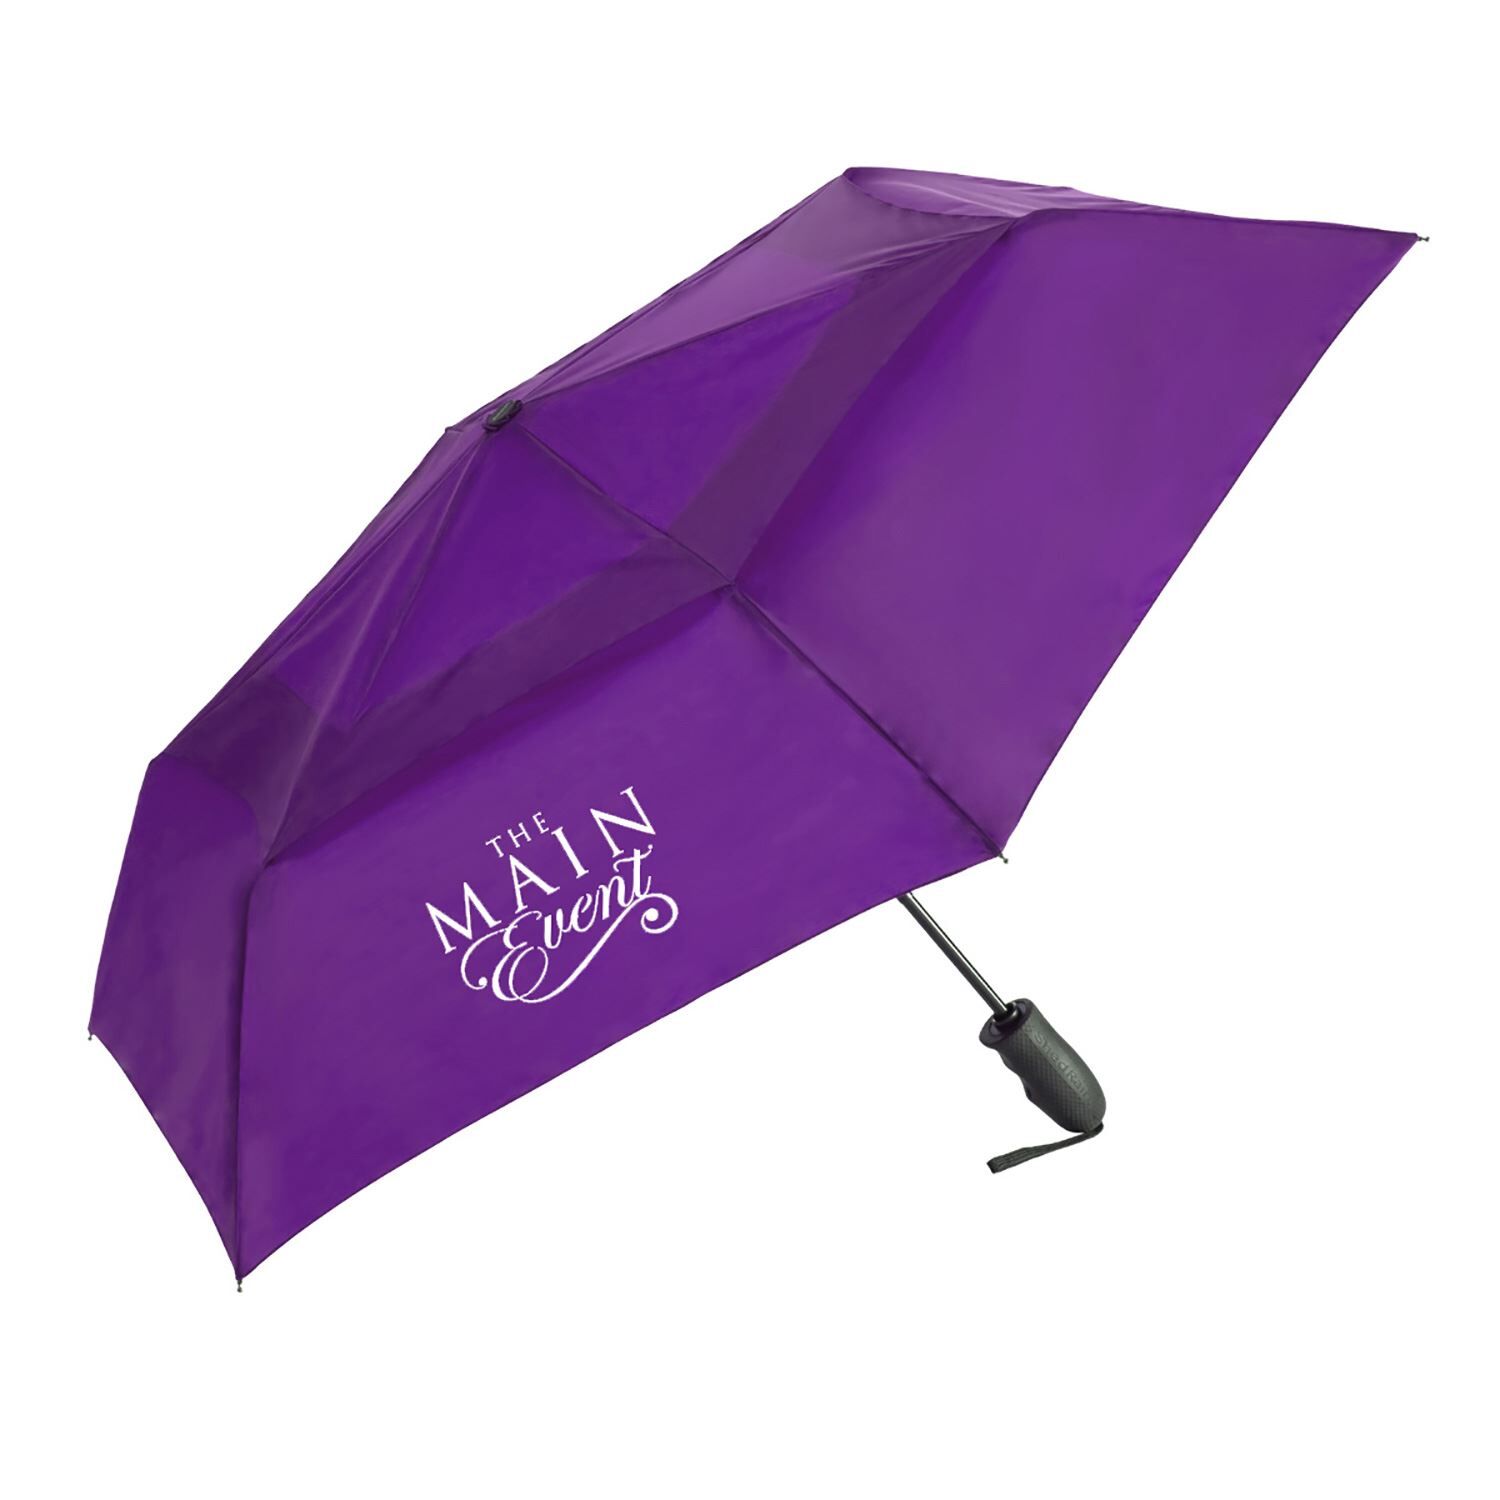 Custom Branded ShedRain Umbrellas - Purple